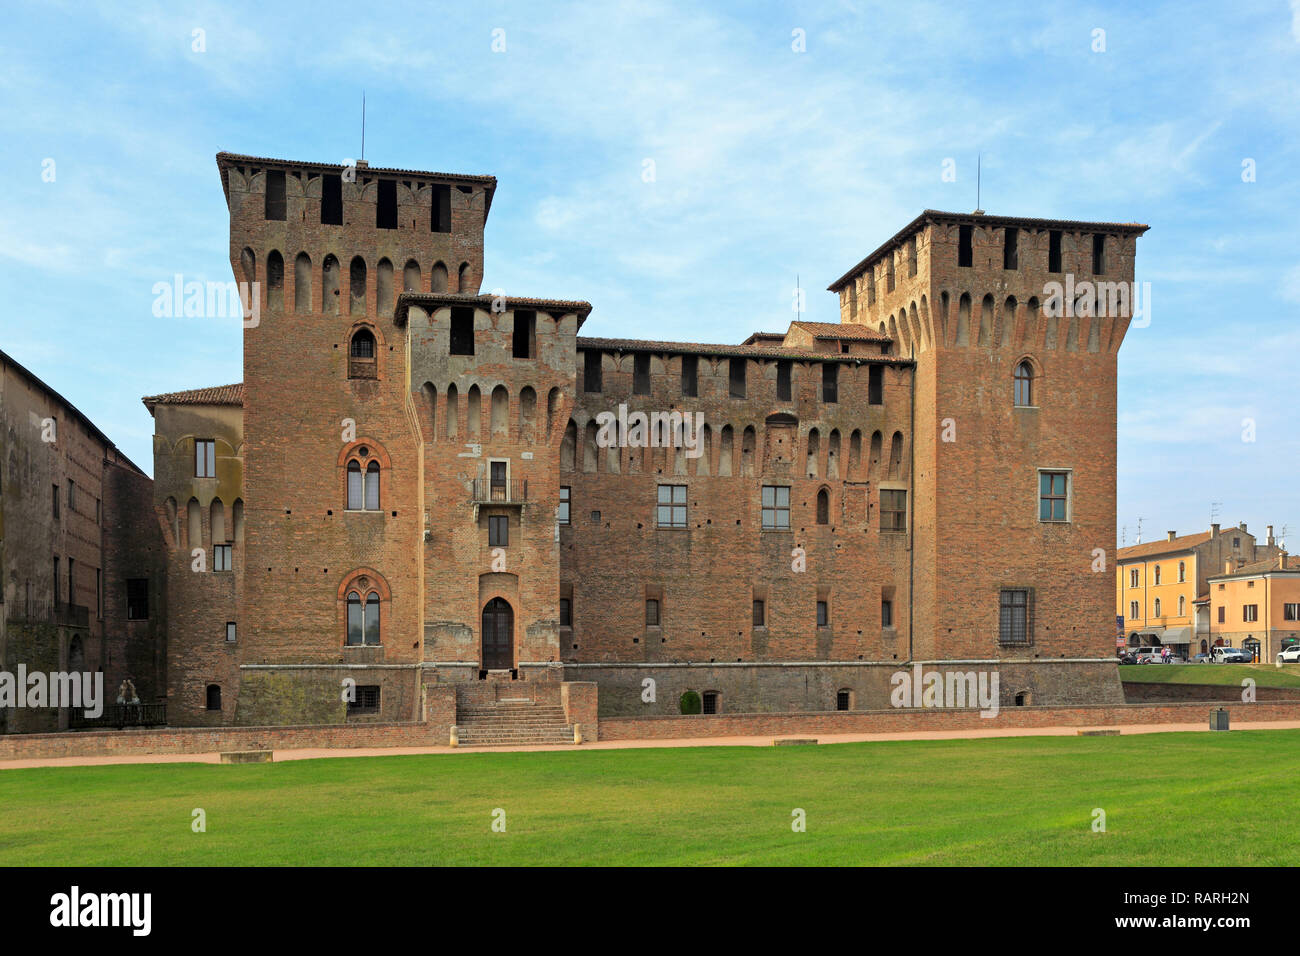 Castello di San Giorgio, Mantoue, UNESCO World Heritage Site, Lombardie, Italie. Banque D'Images